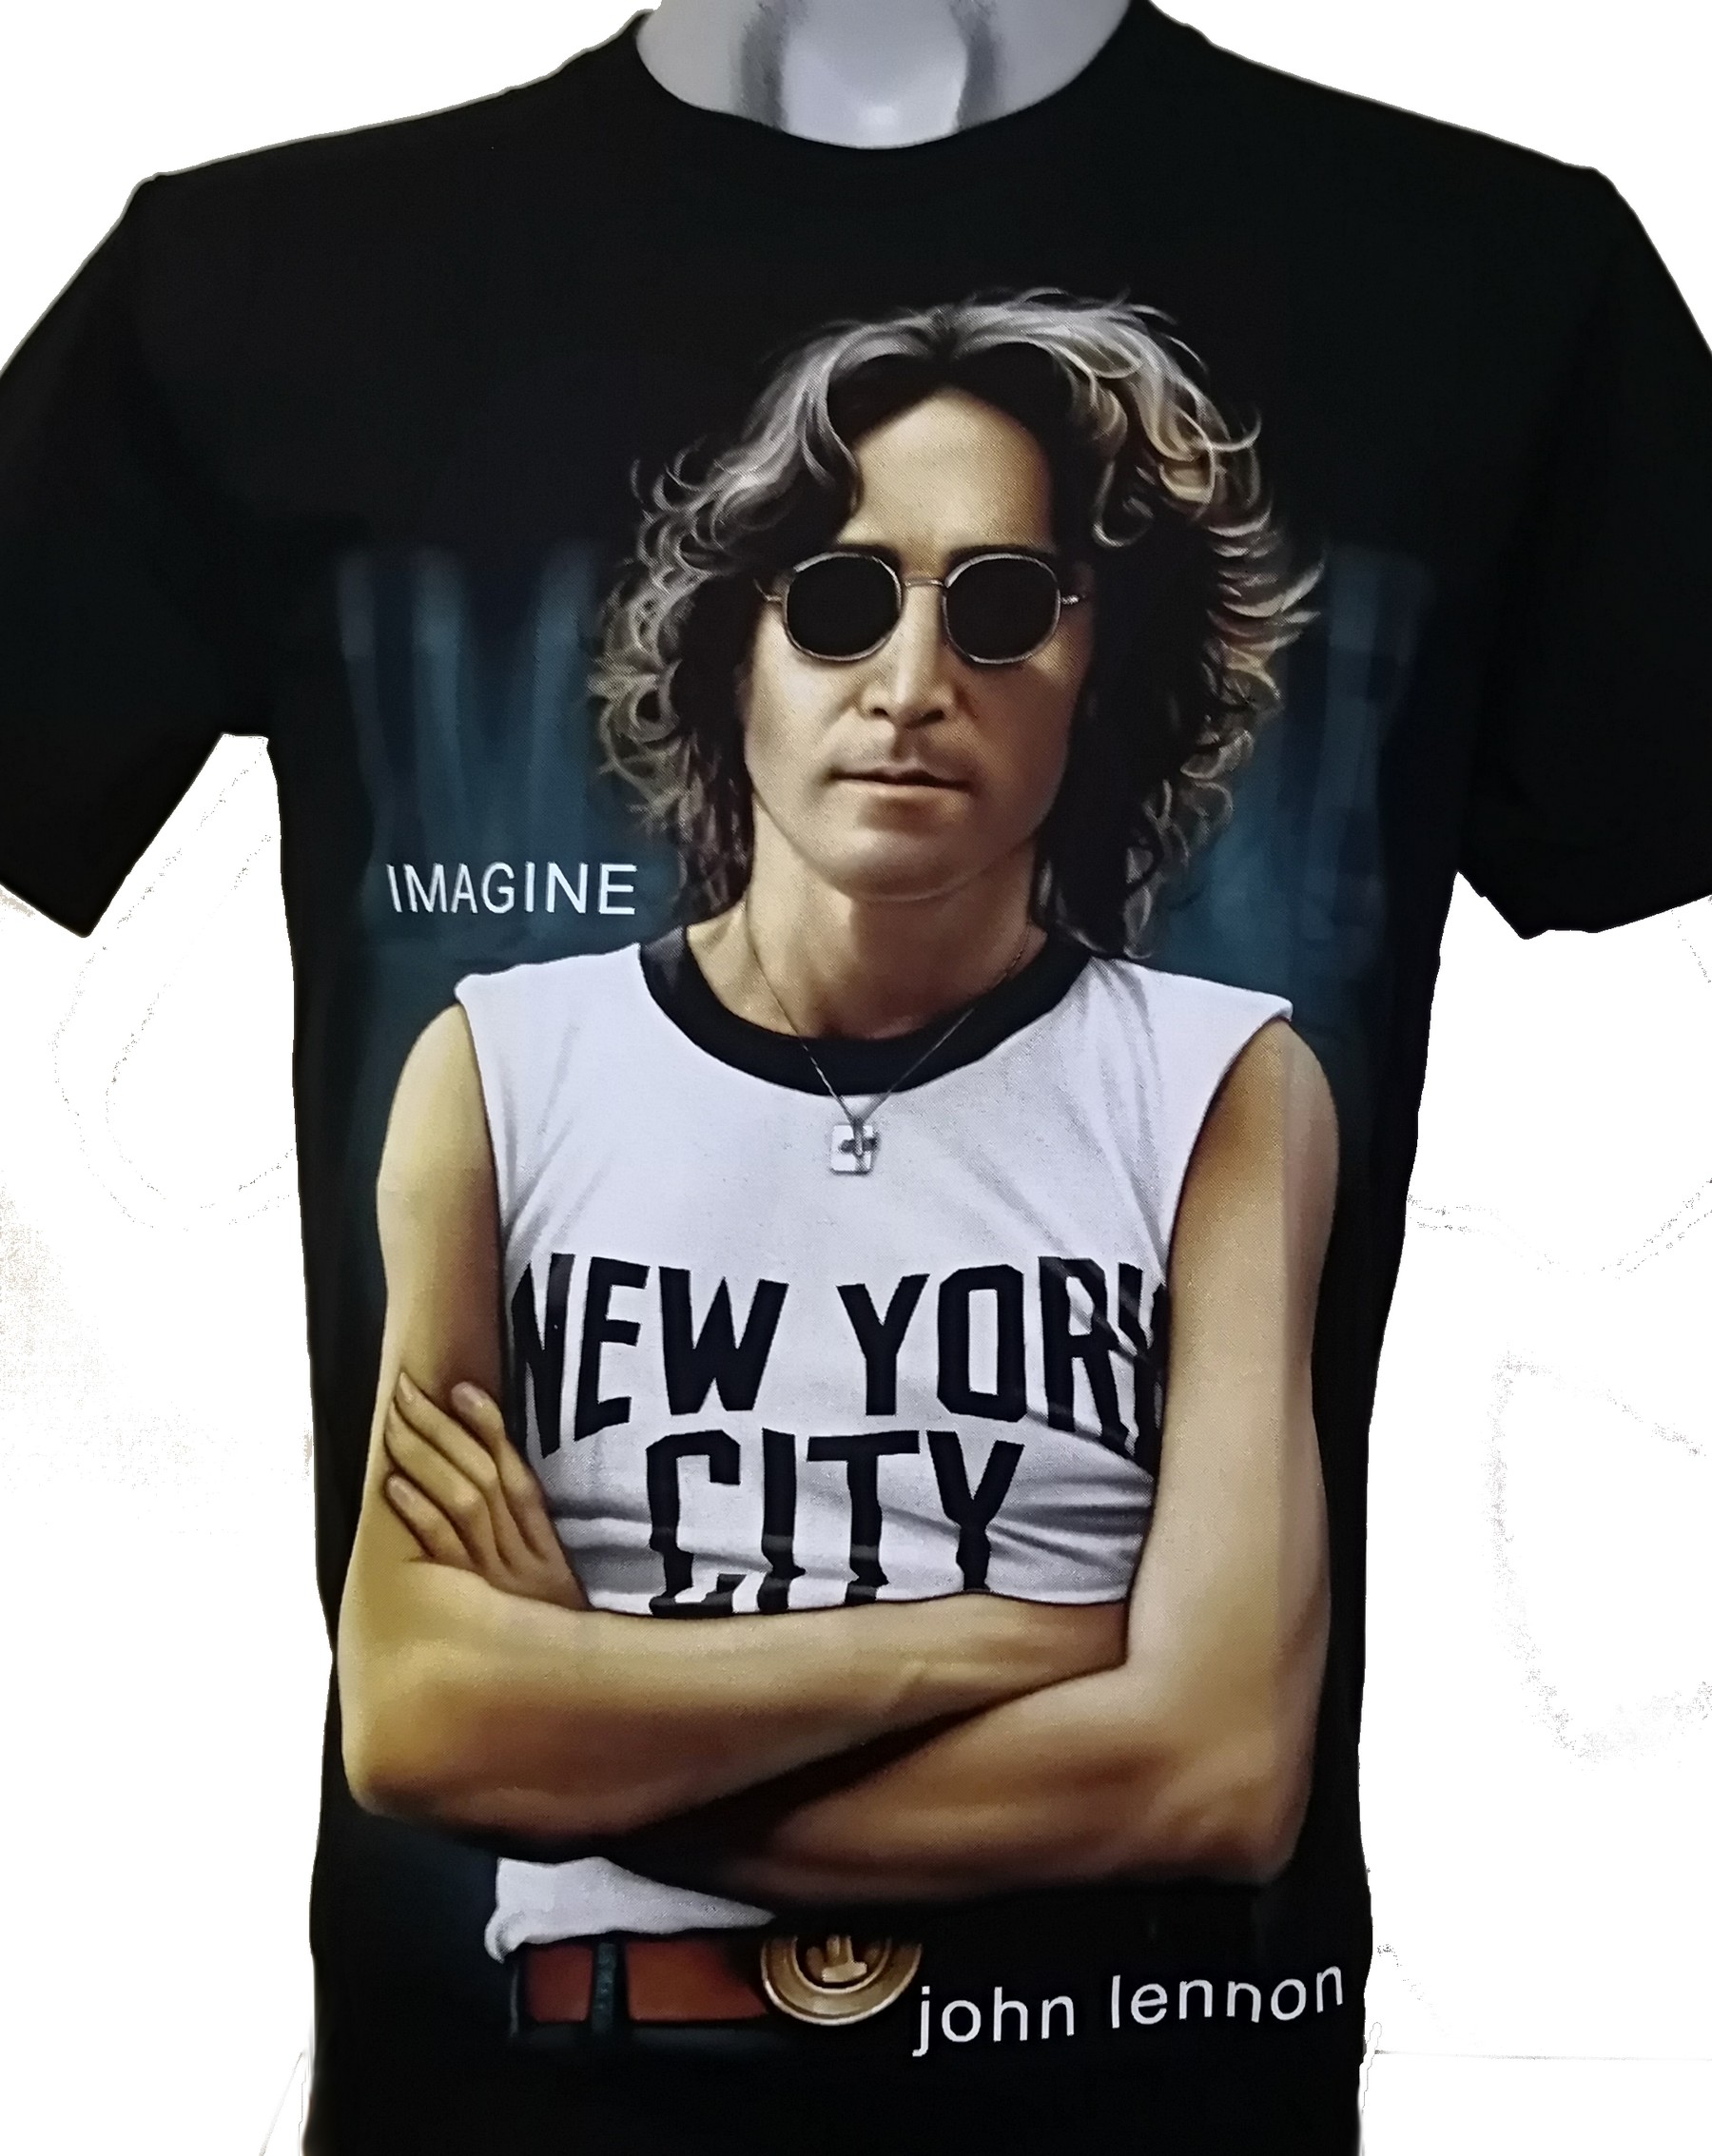 John Lennon Shirt Flash Sales, 52% OFF ...